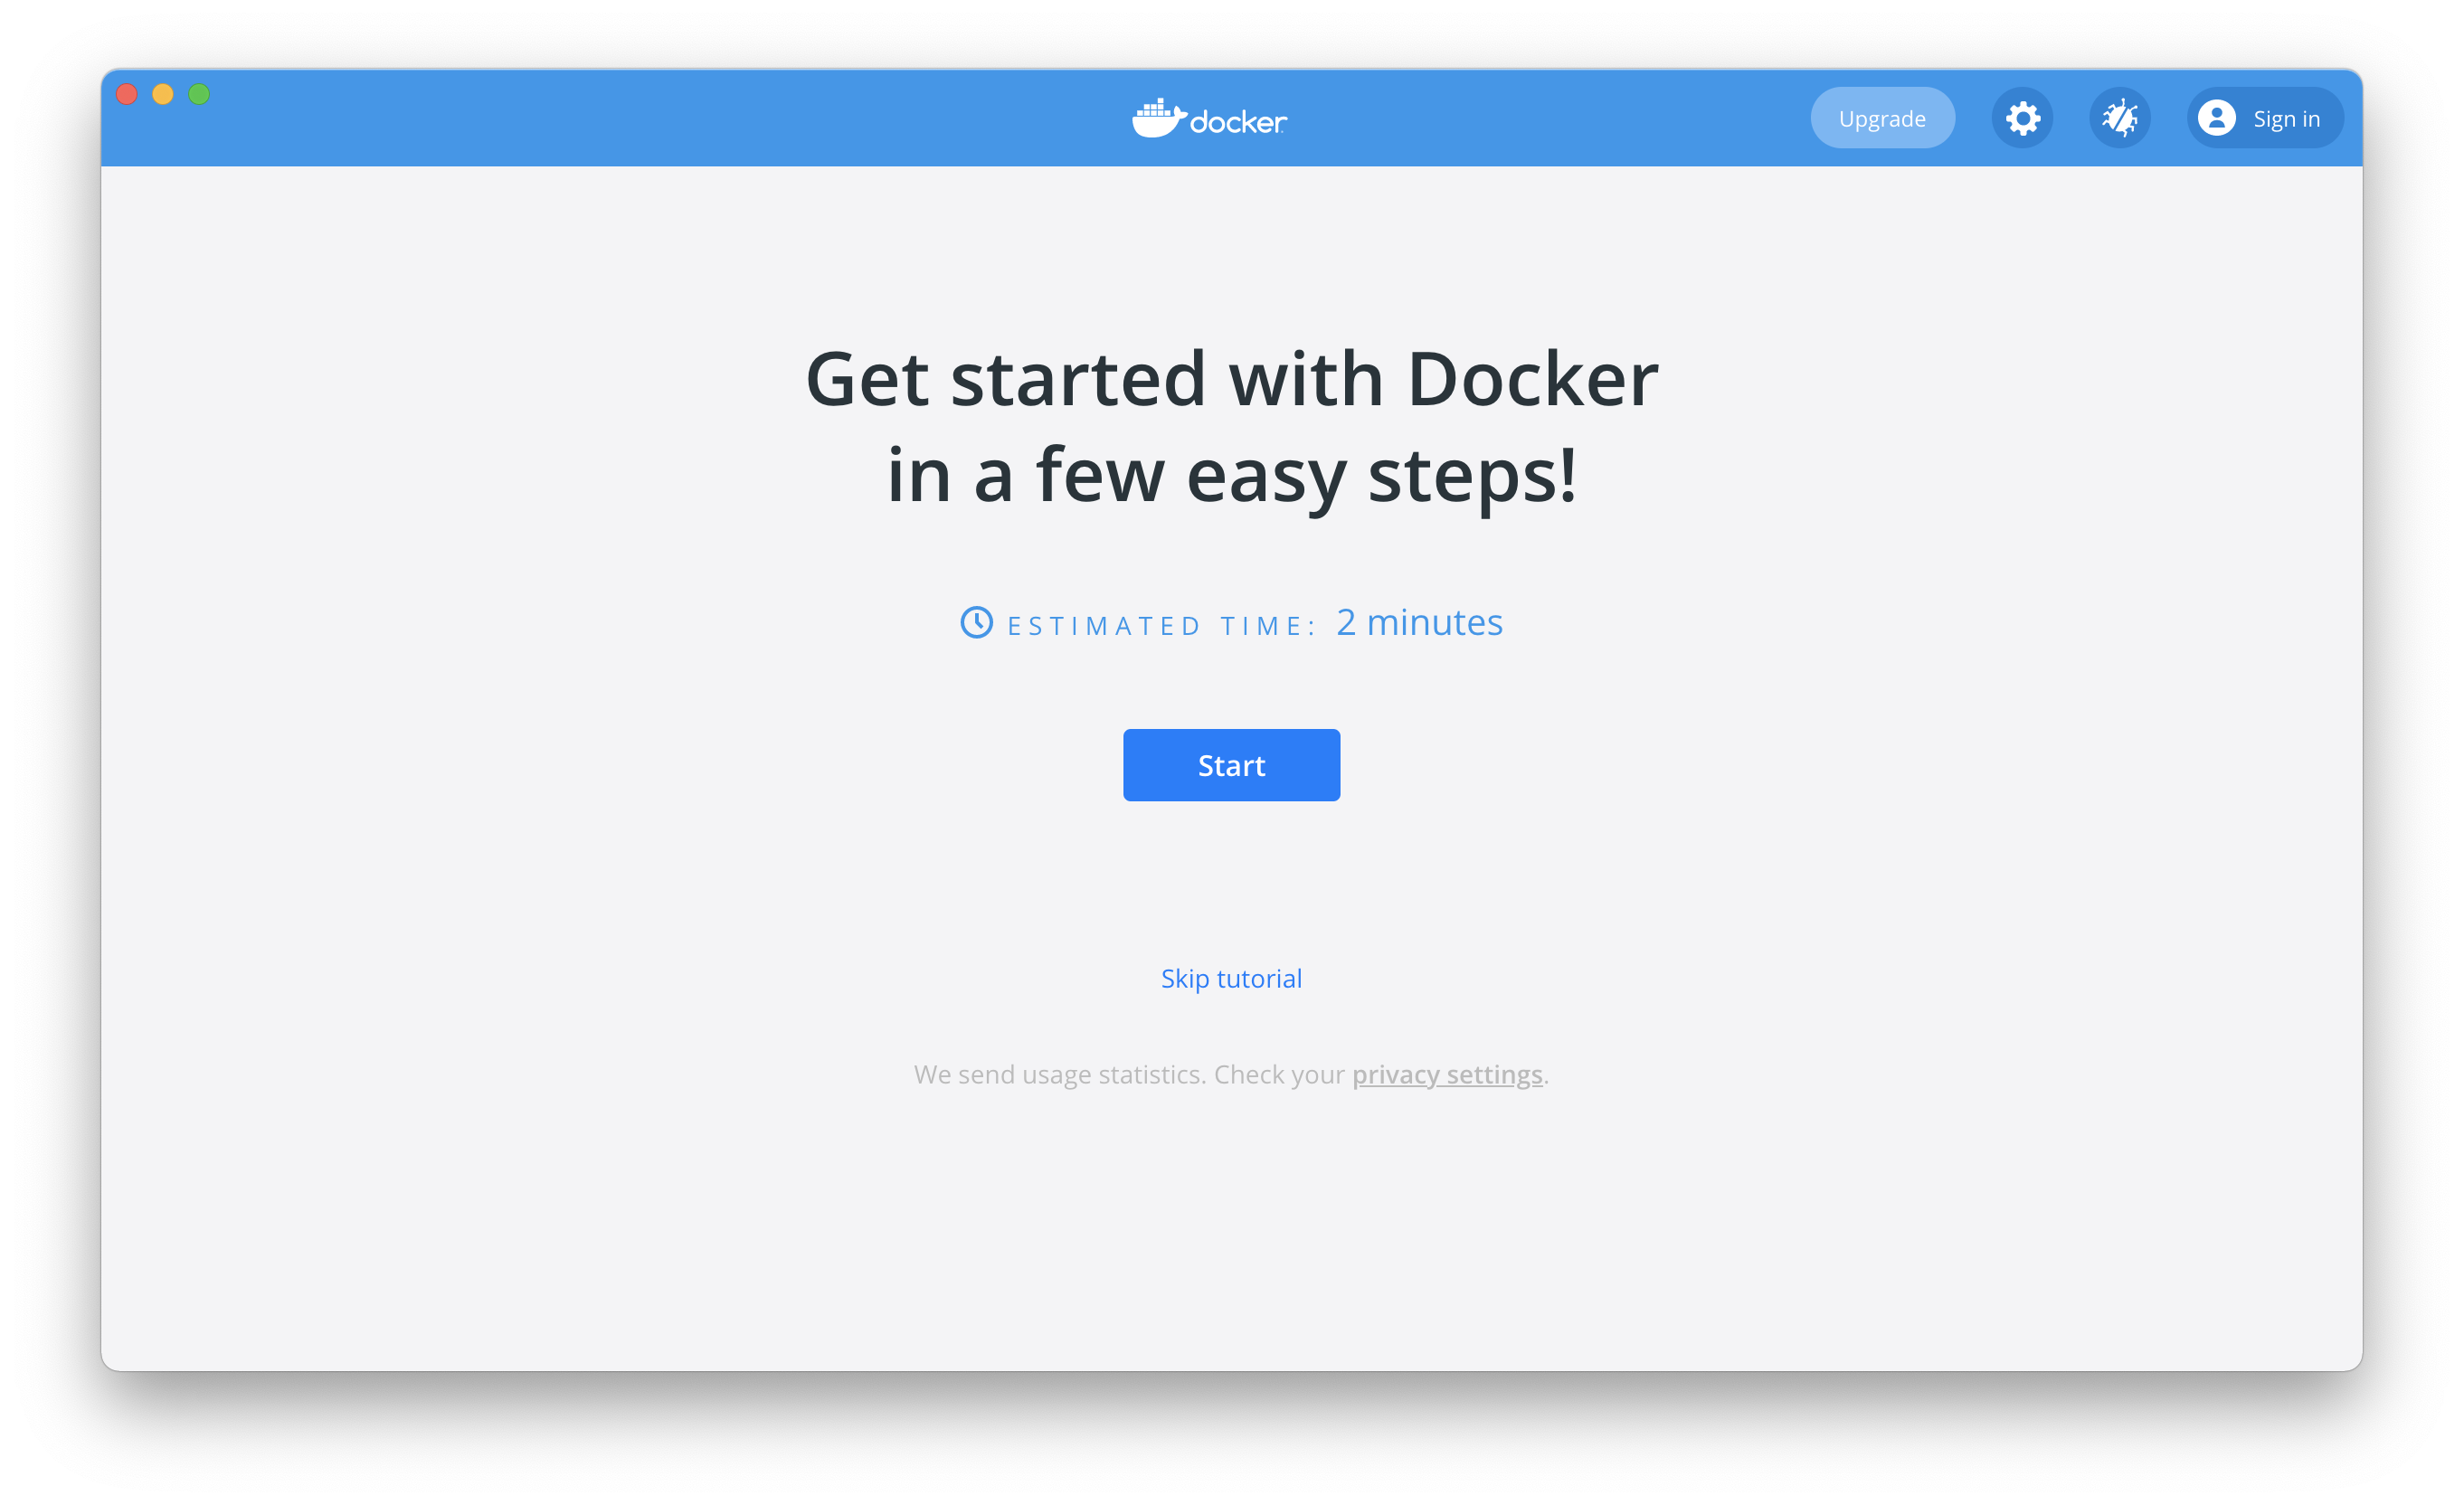 macOS Docker's getting started screen.